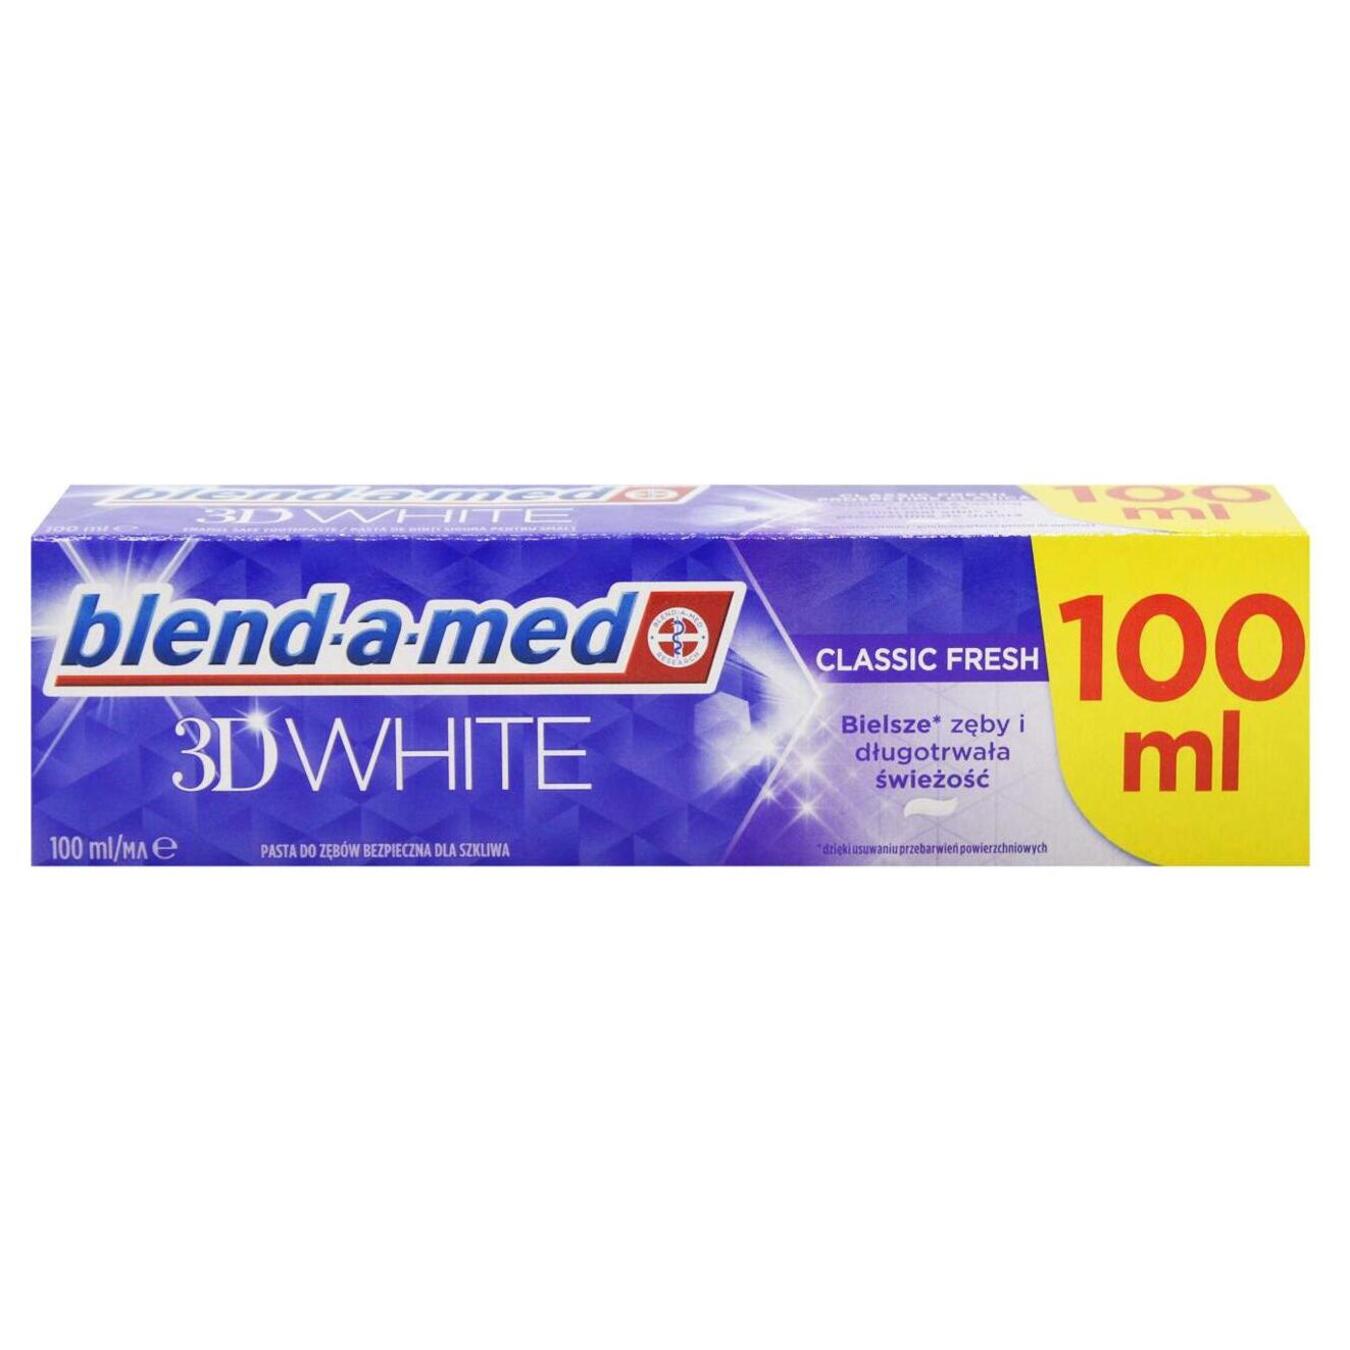 Toothpaste Blend-a-med 3d white classic freshness 100ml